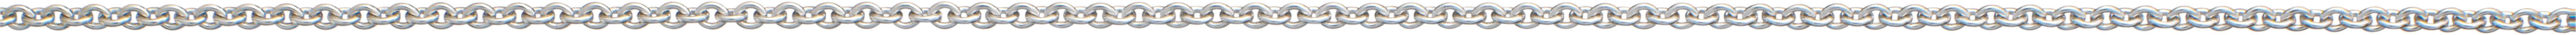 Anchor chain round platinum 960/-Pt 1.10mm, wire thickness 0.30mm